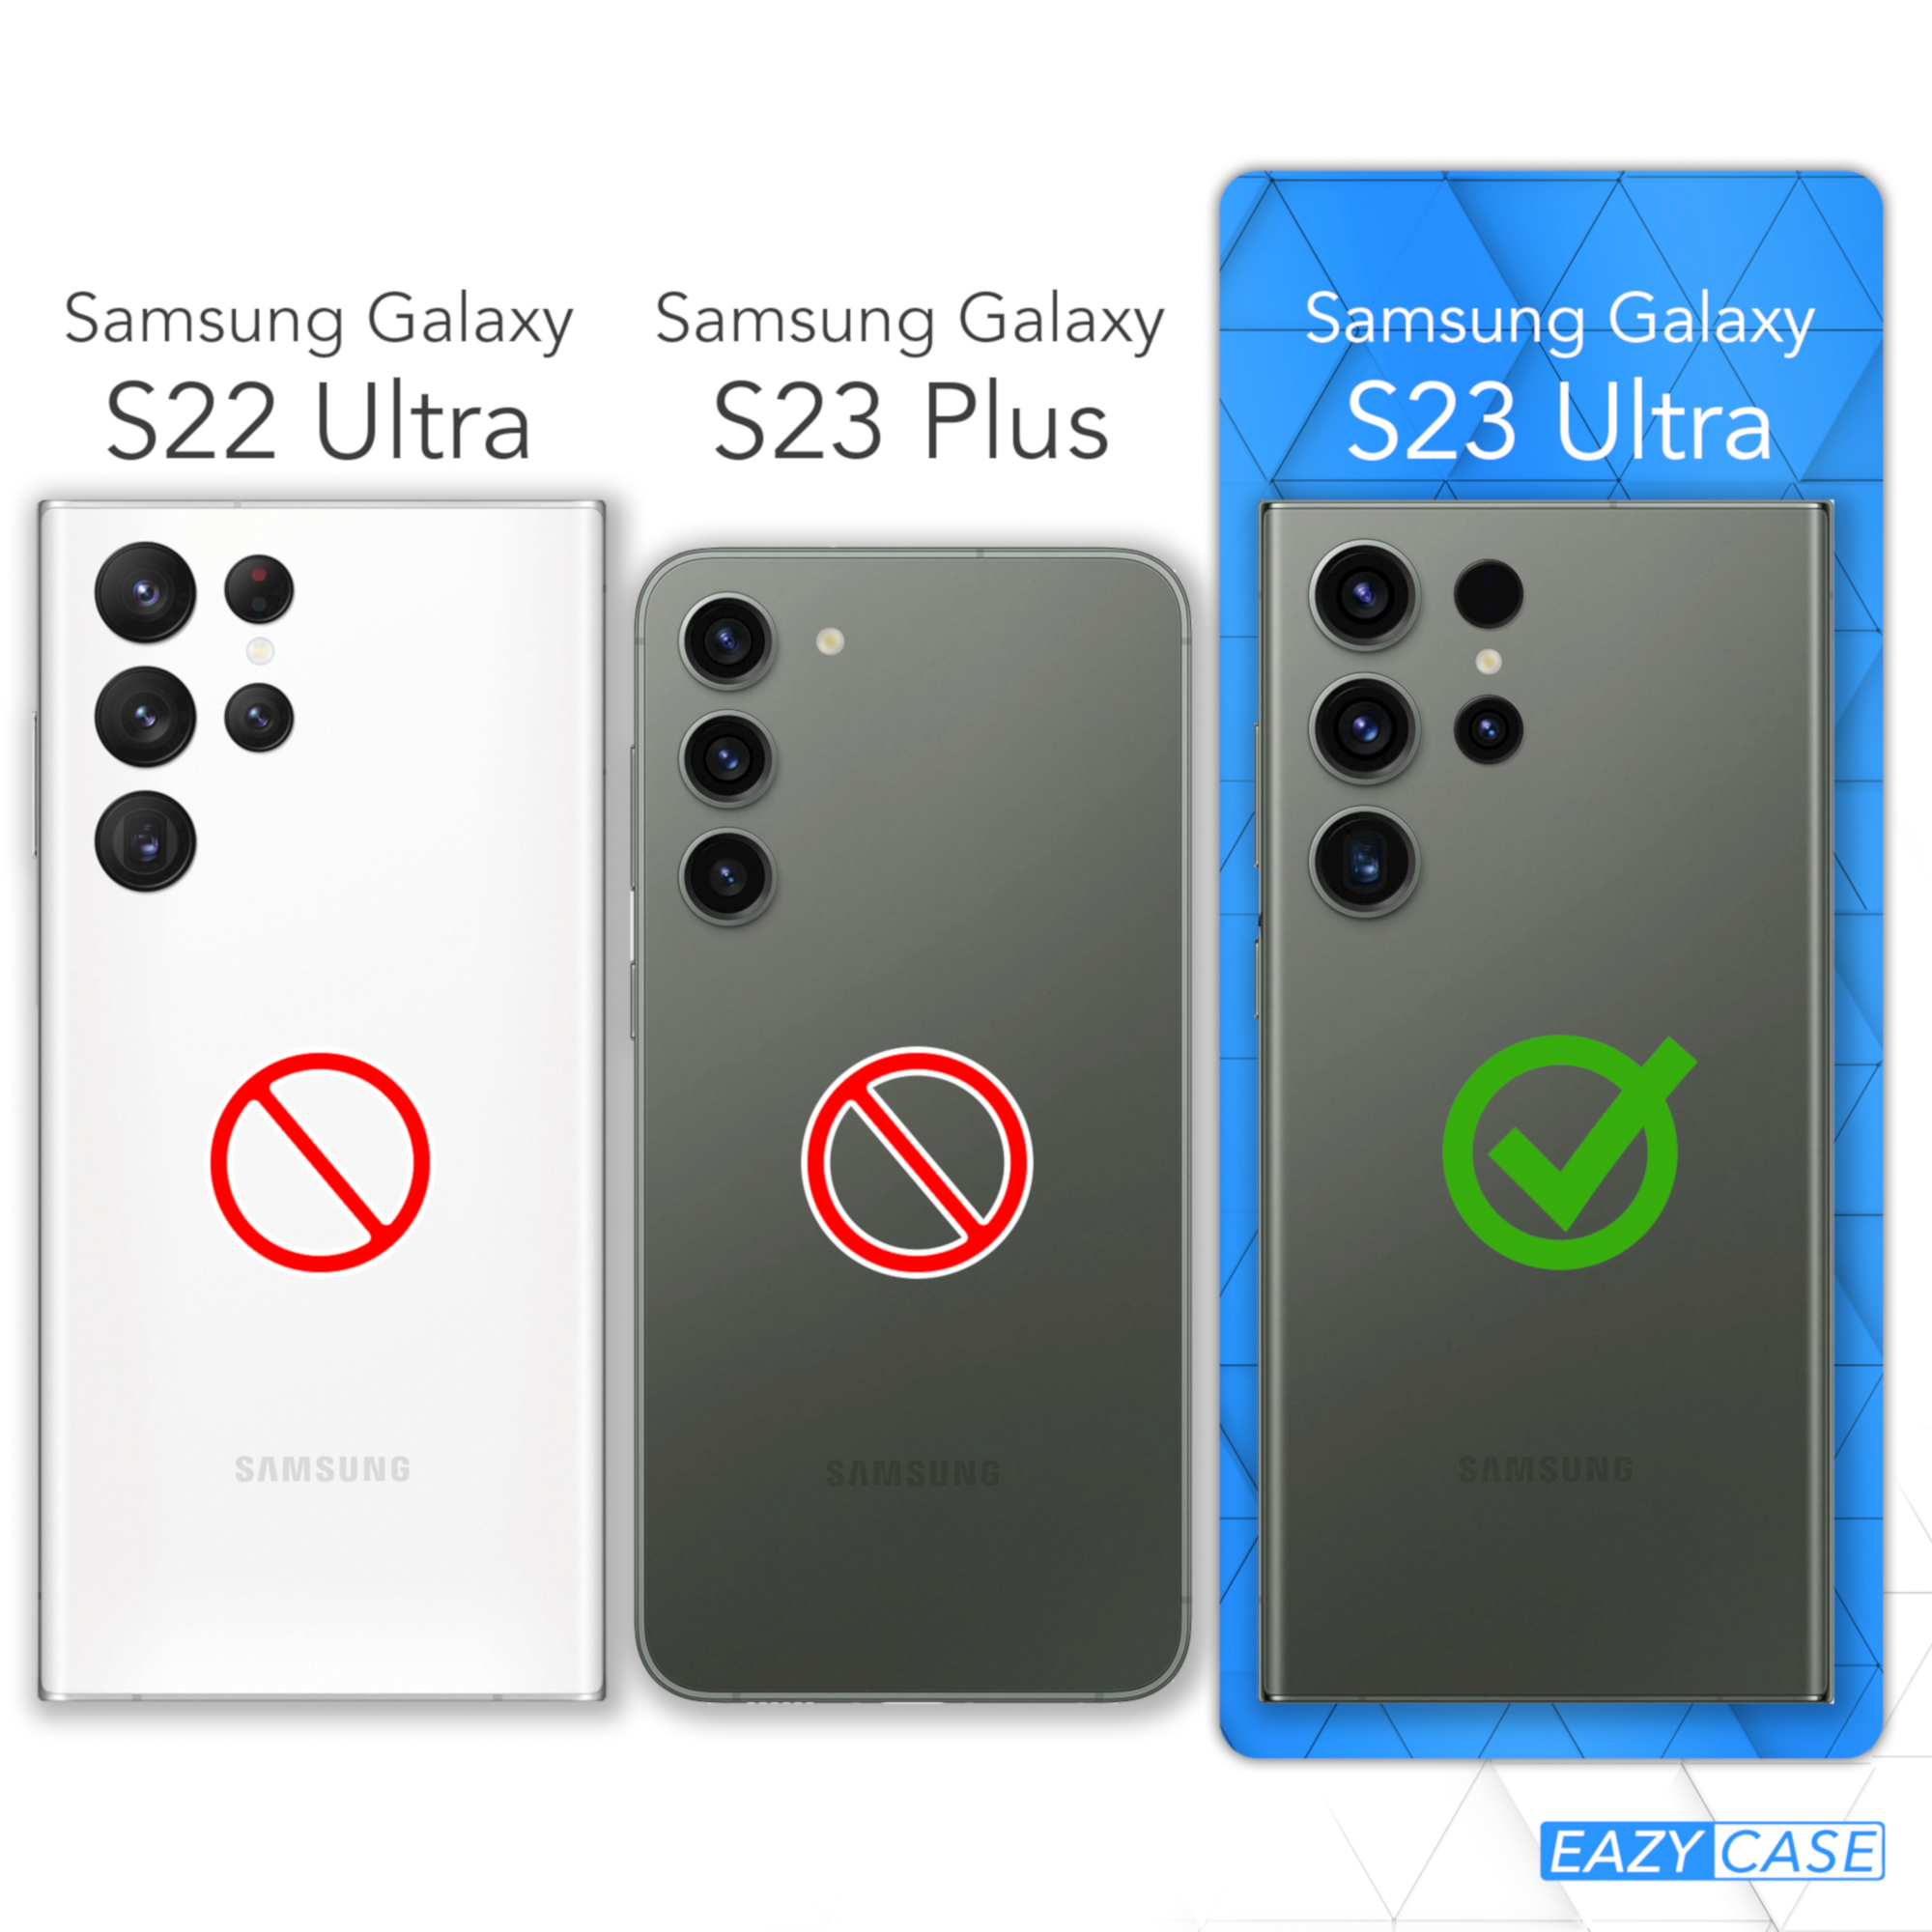 EAZY CASE Premium Ultra, Handycase, Silikon Galaxy S23 Rot Backcover, Samsung